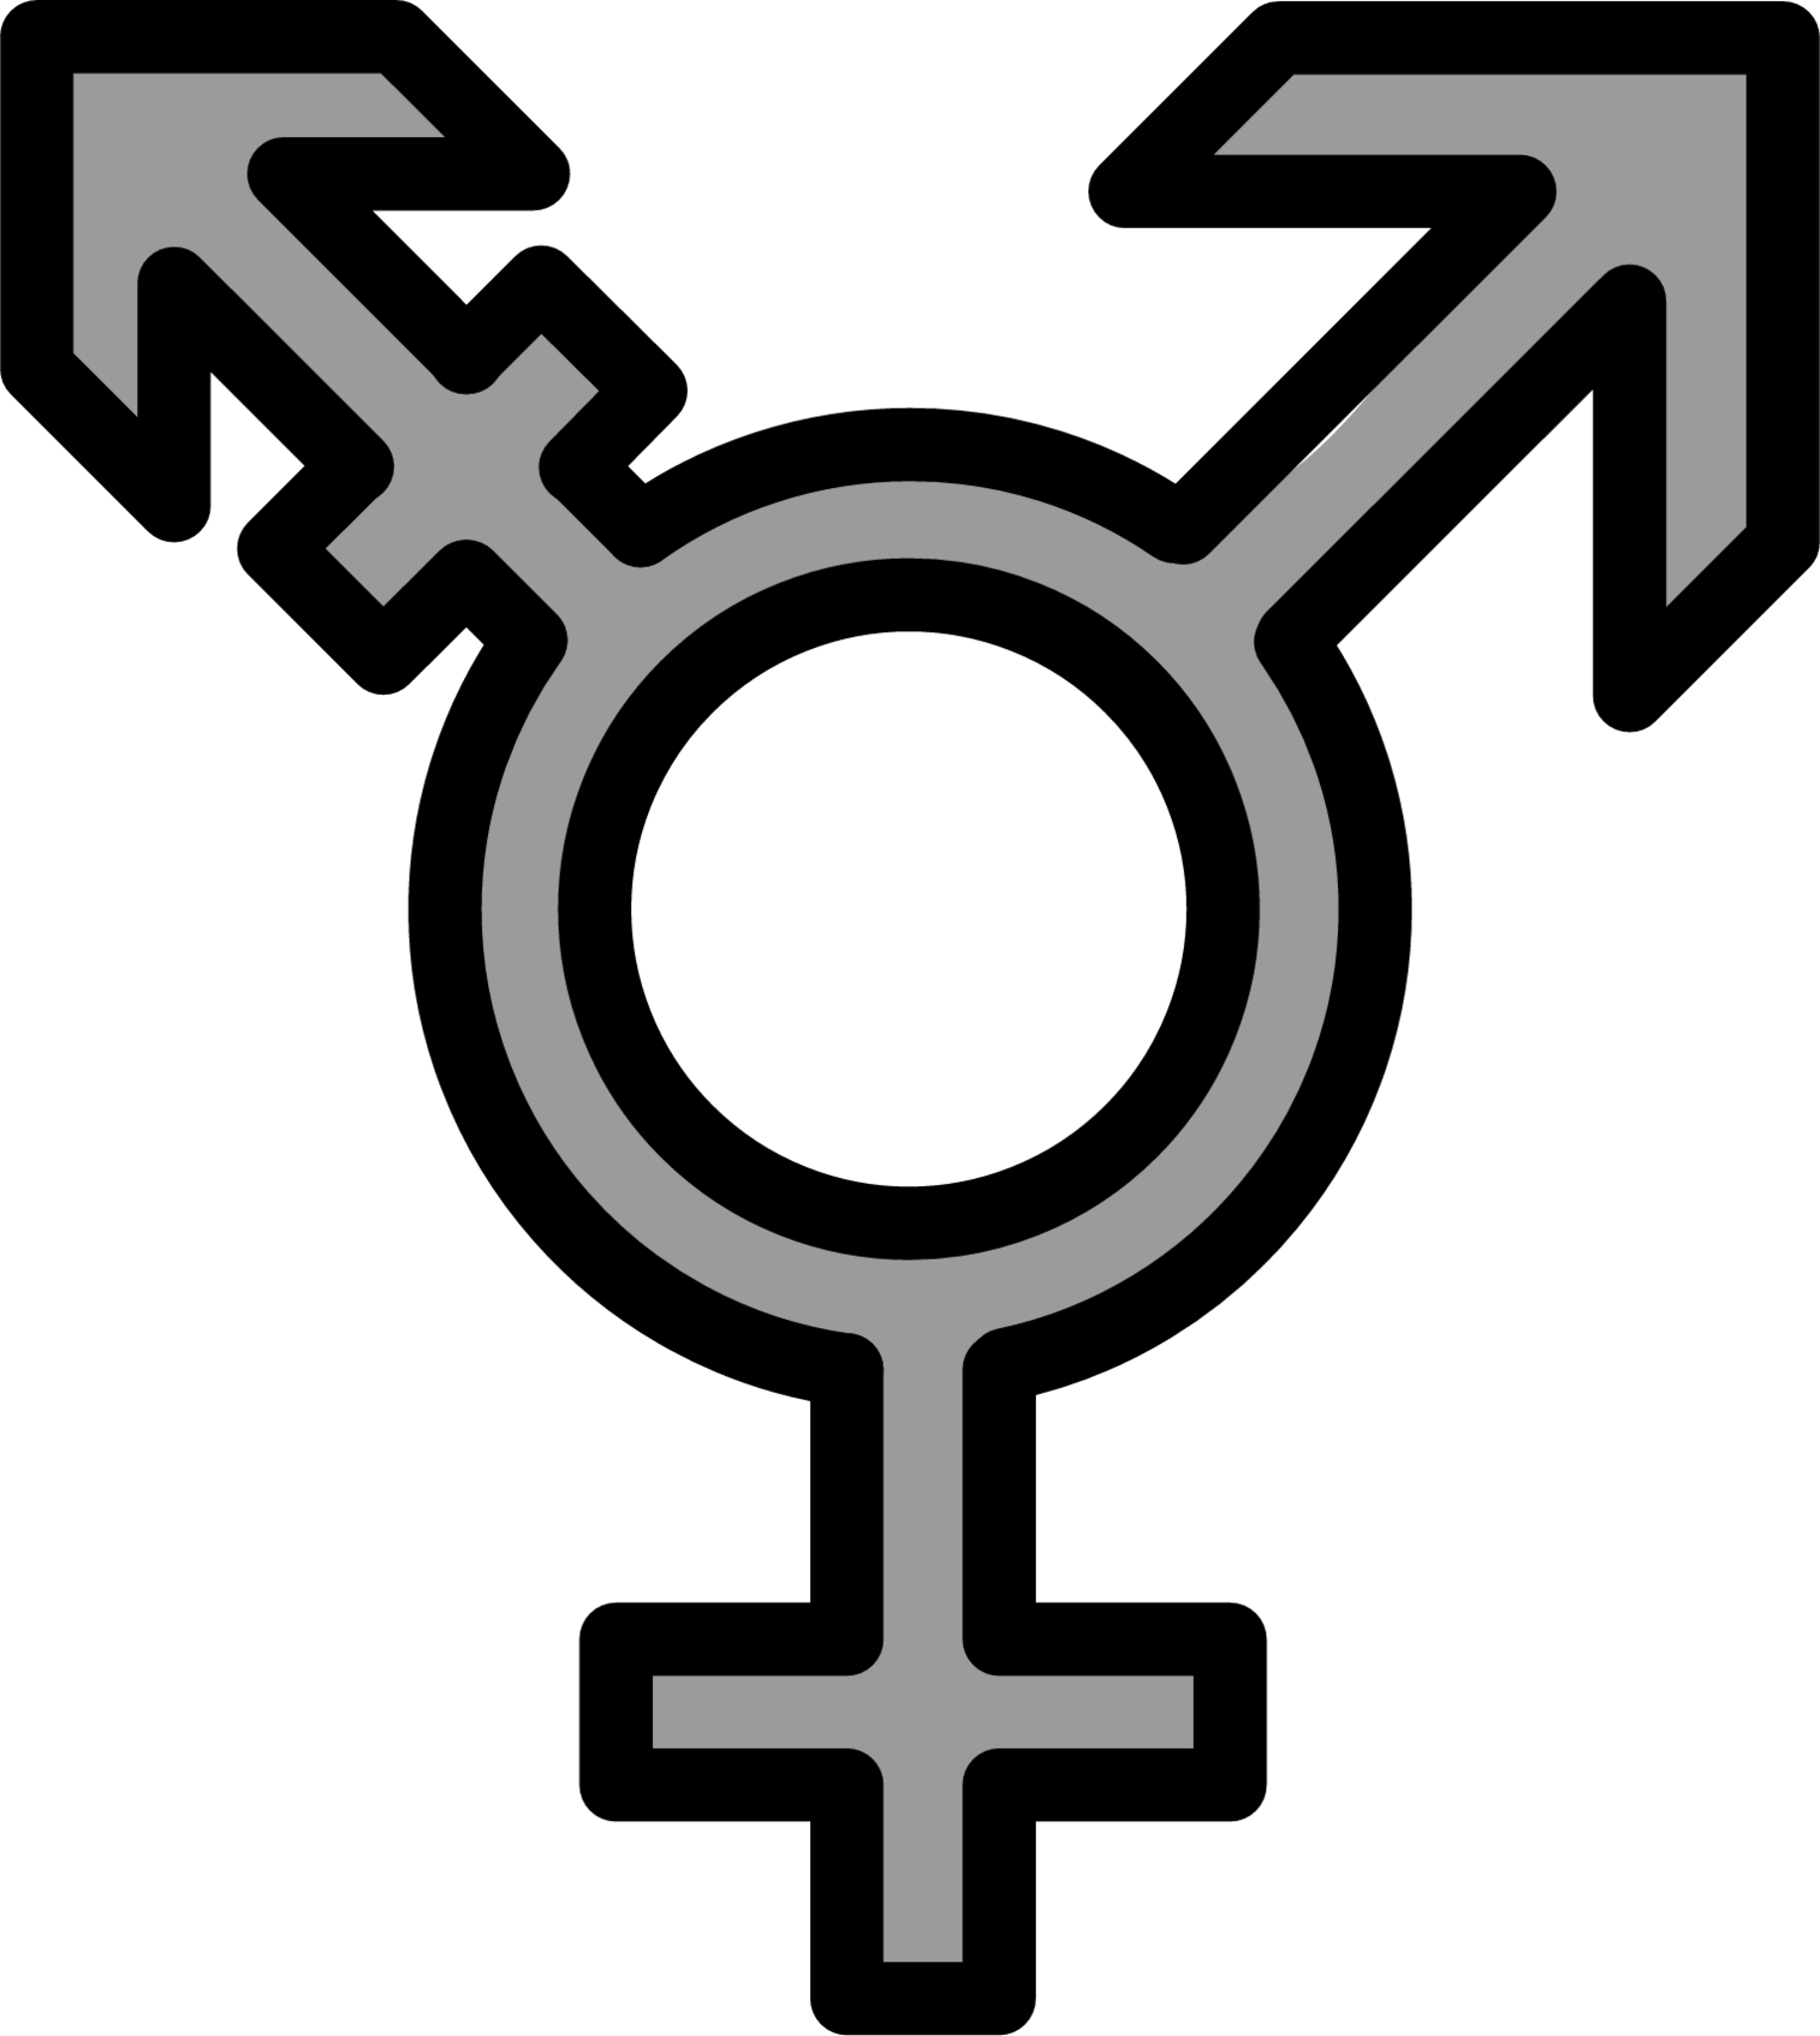 transgender symbol emoji